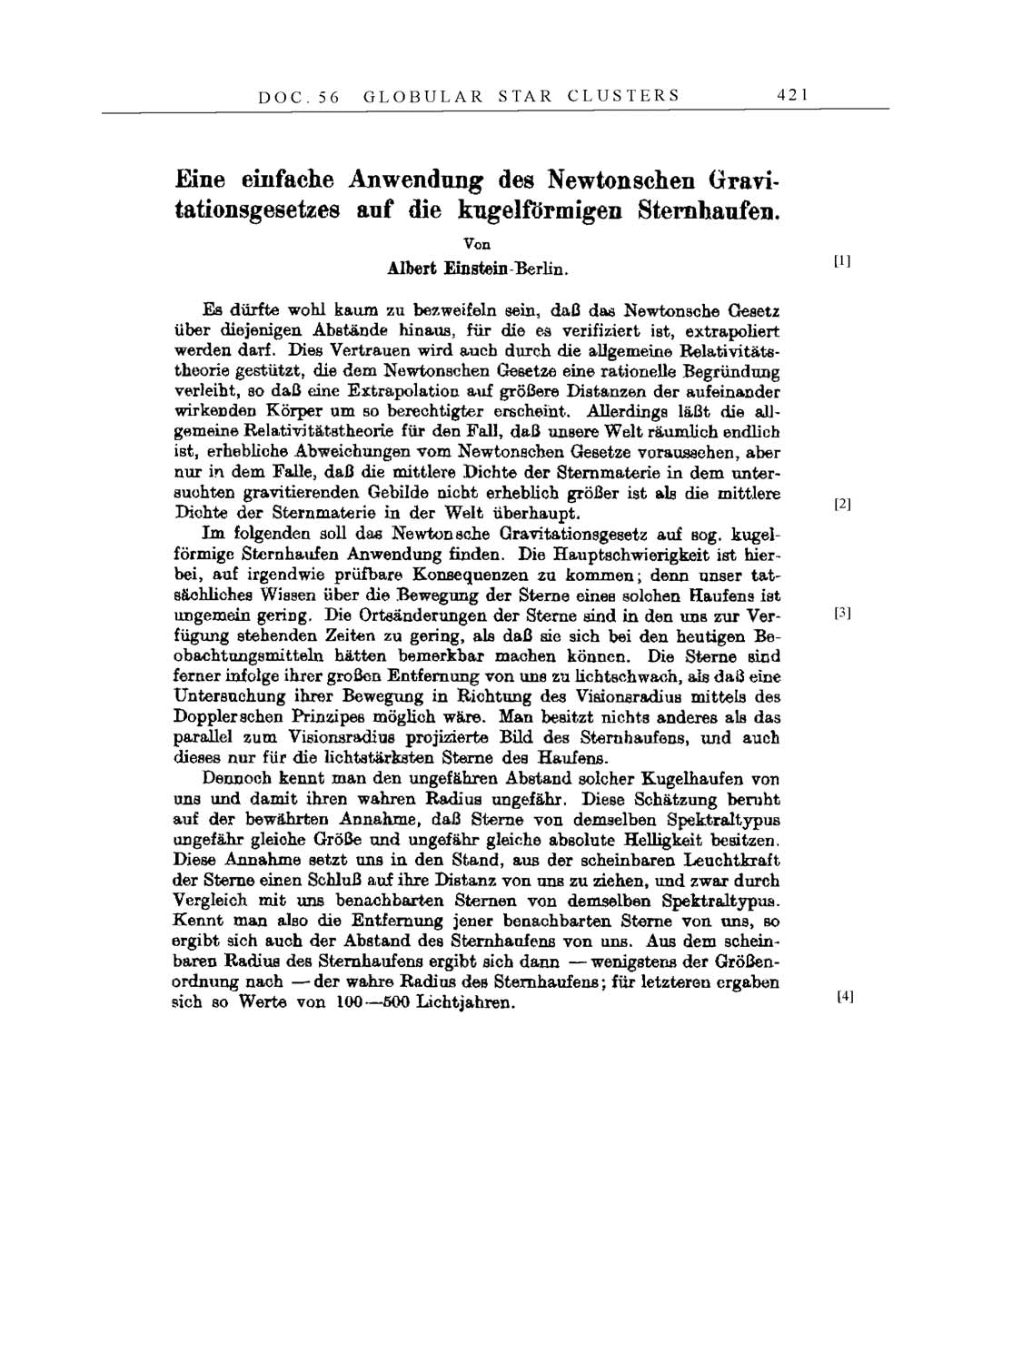 Volume 7: The Berlin Years: Writings, 1918-1921 page 421